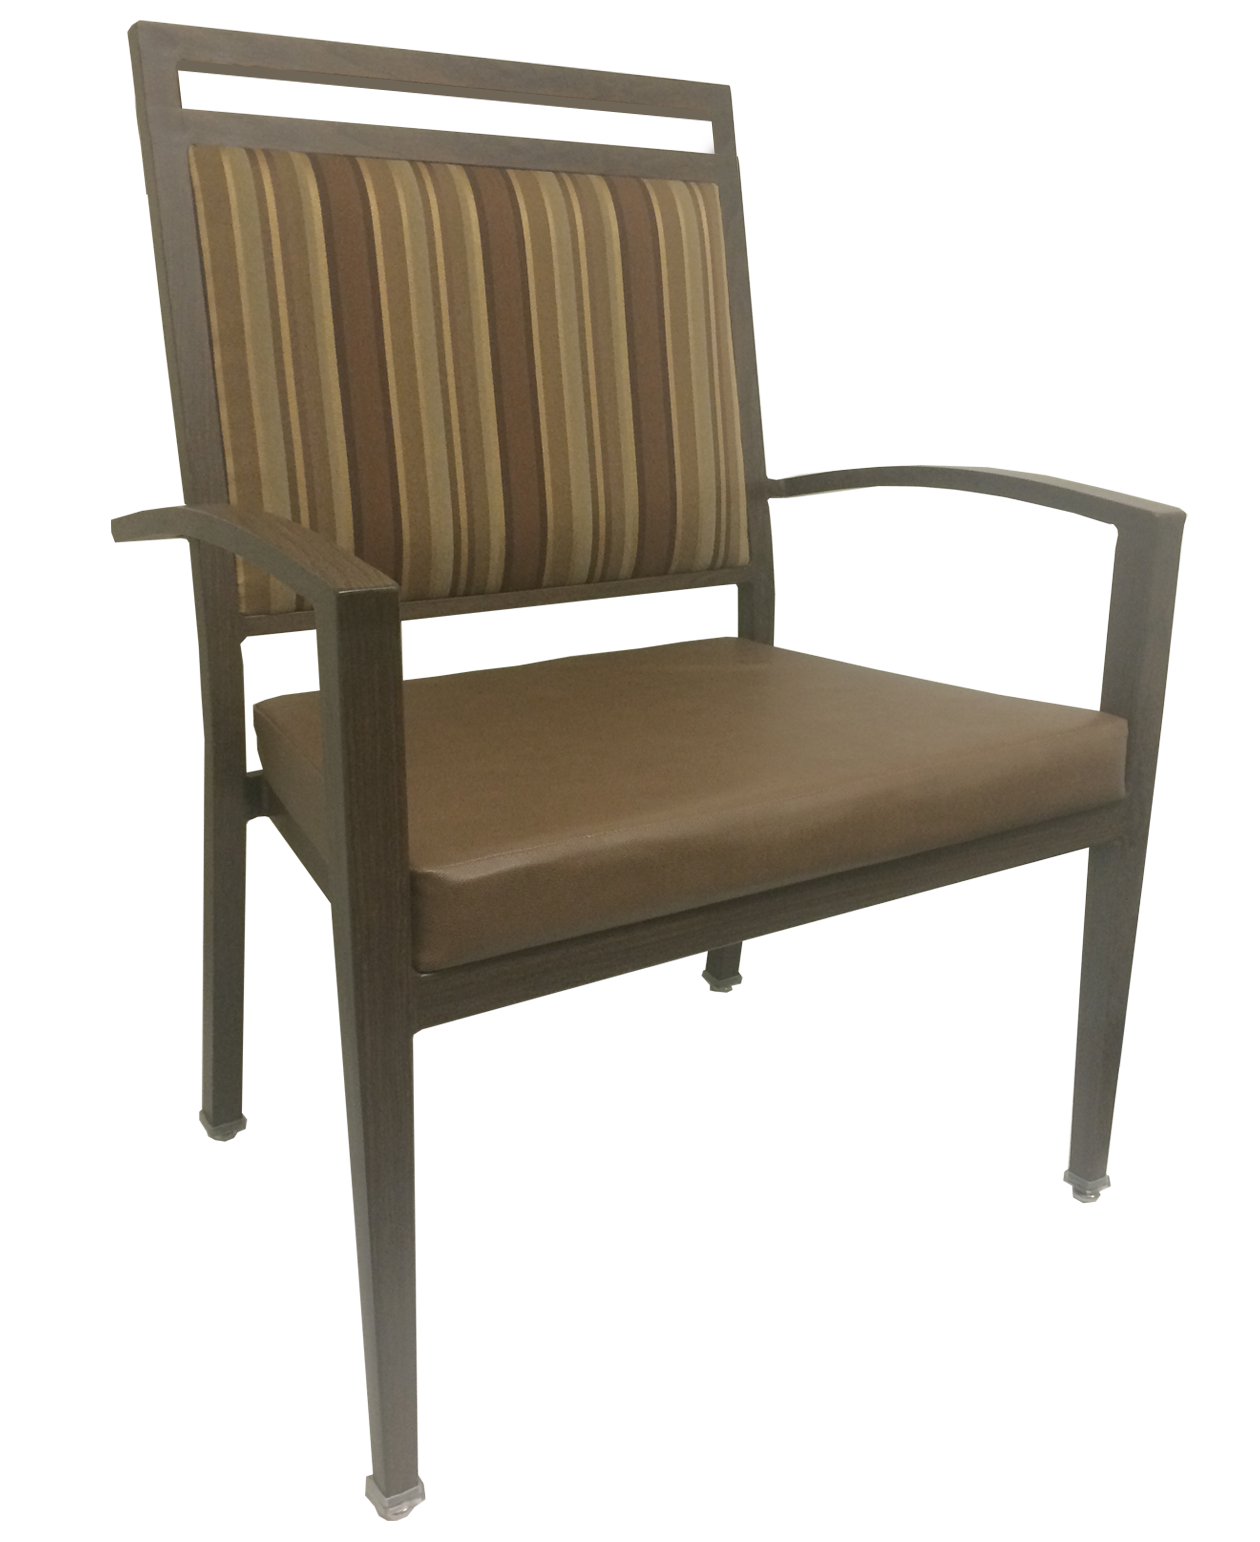 Aluminum Wood-Grain Bariatric Chairs